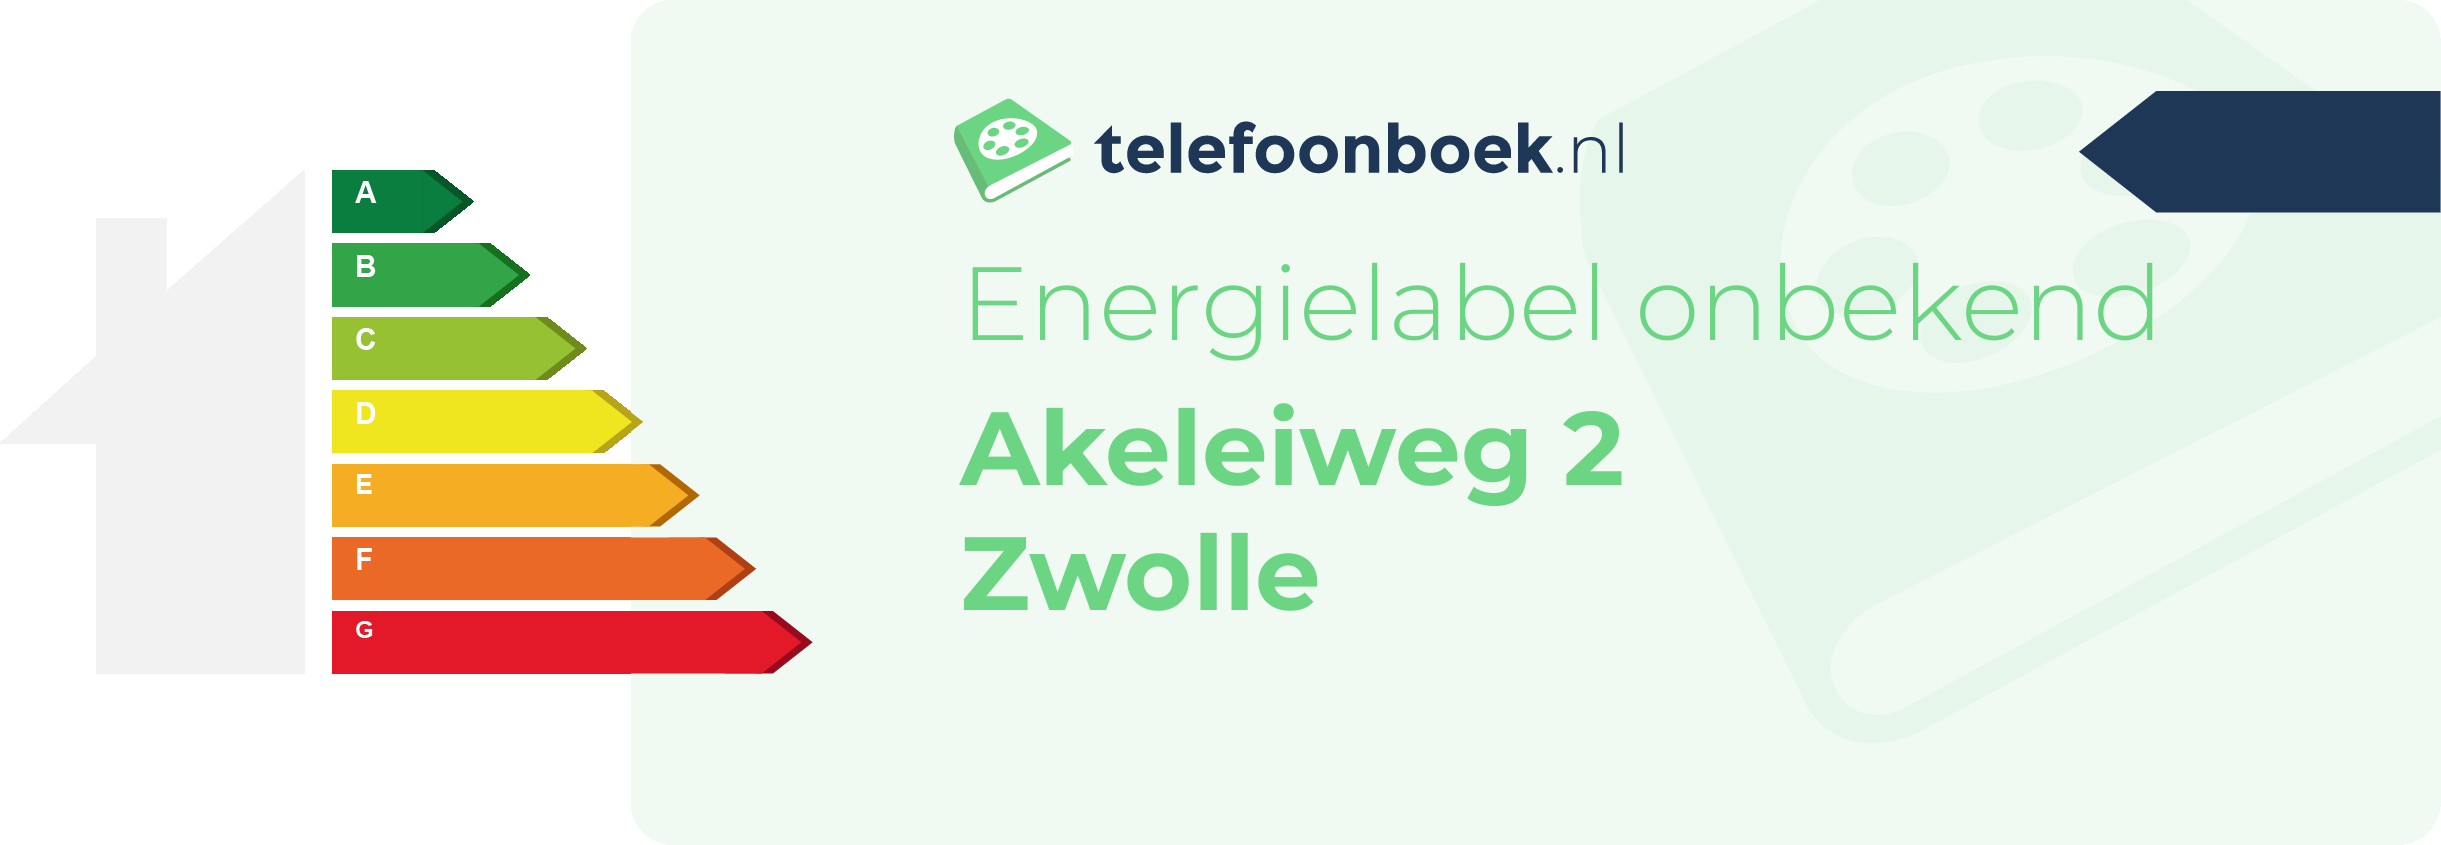 Energielabel Akeleiweg 2 Zwolle